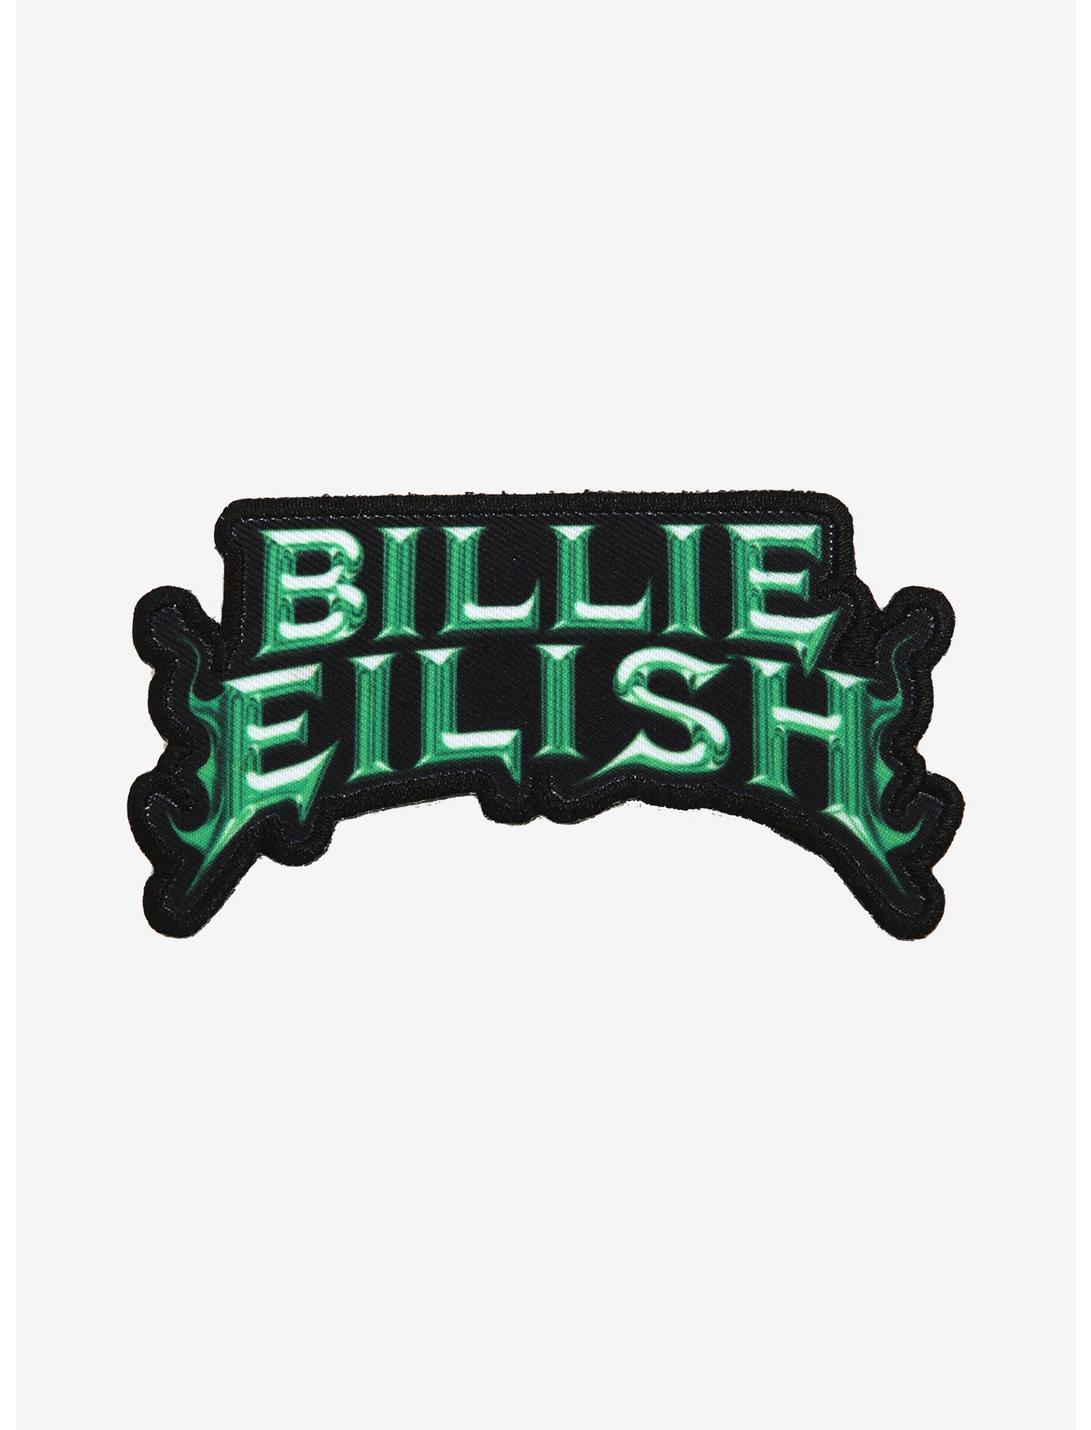 Billie Eilish Name Patch, , hi-res